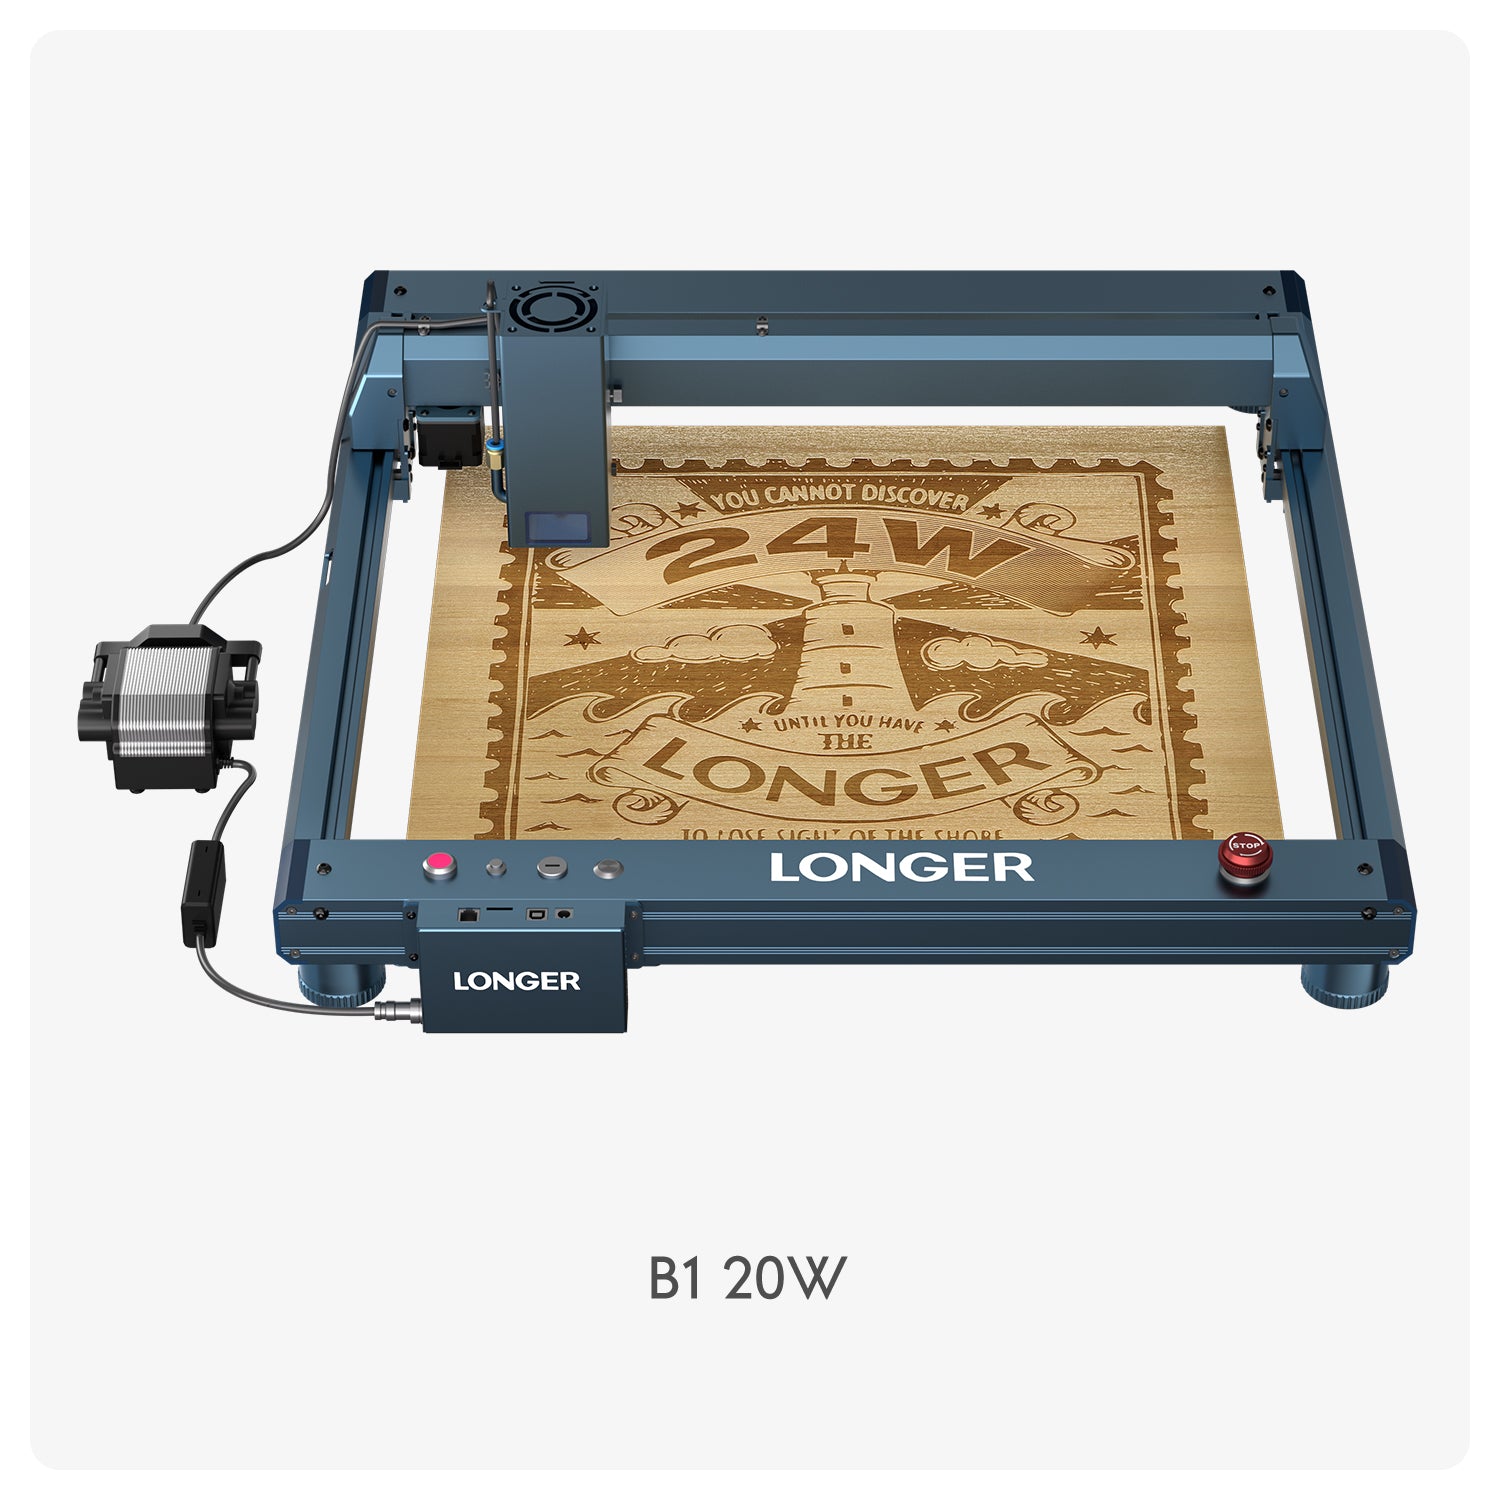 Longer Laser B1 20W Engraving Machine(22-24W Output Power)